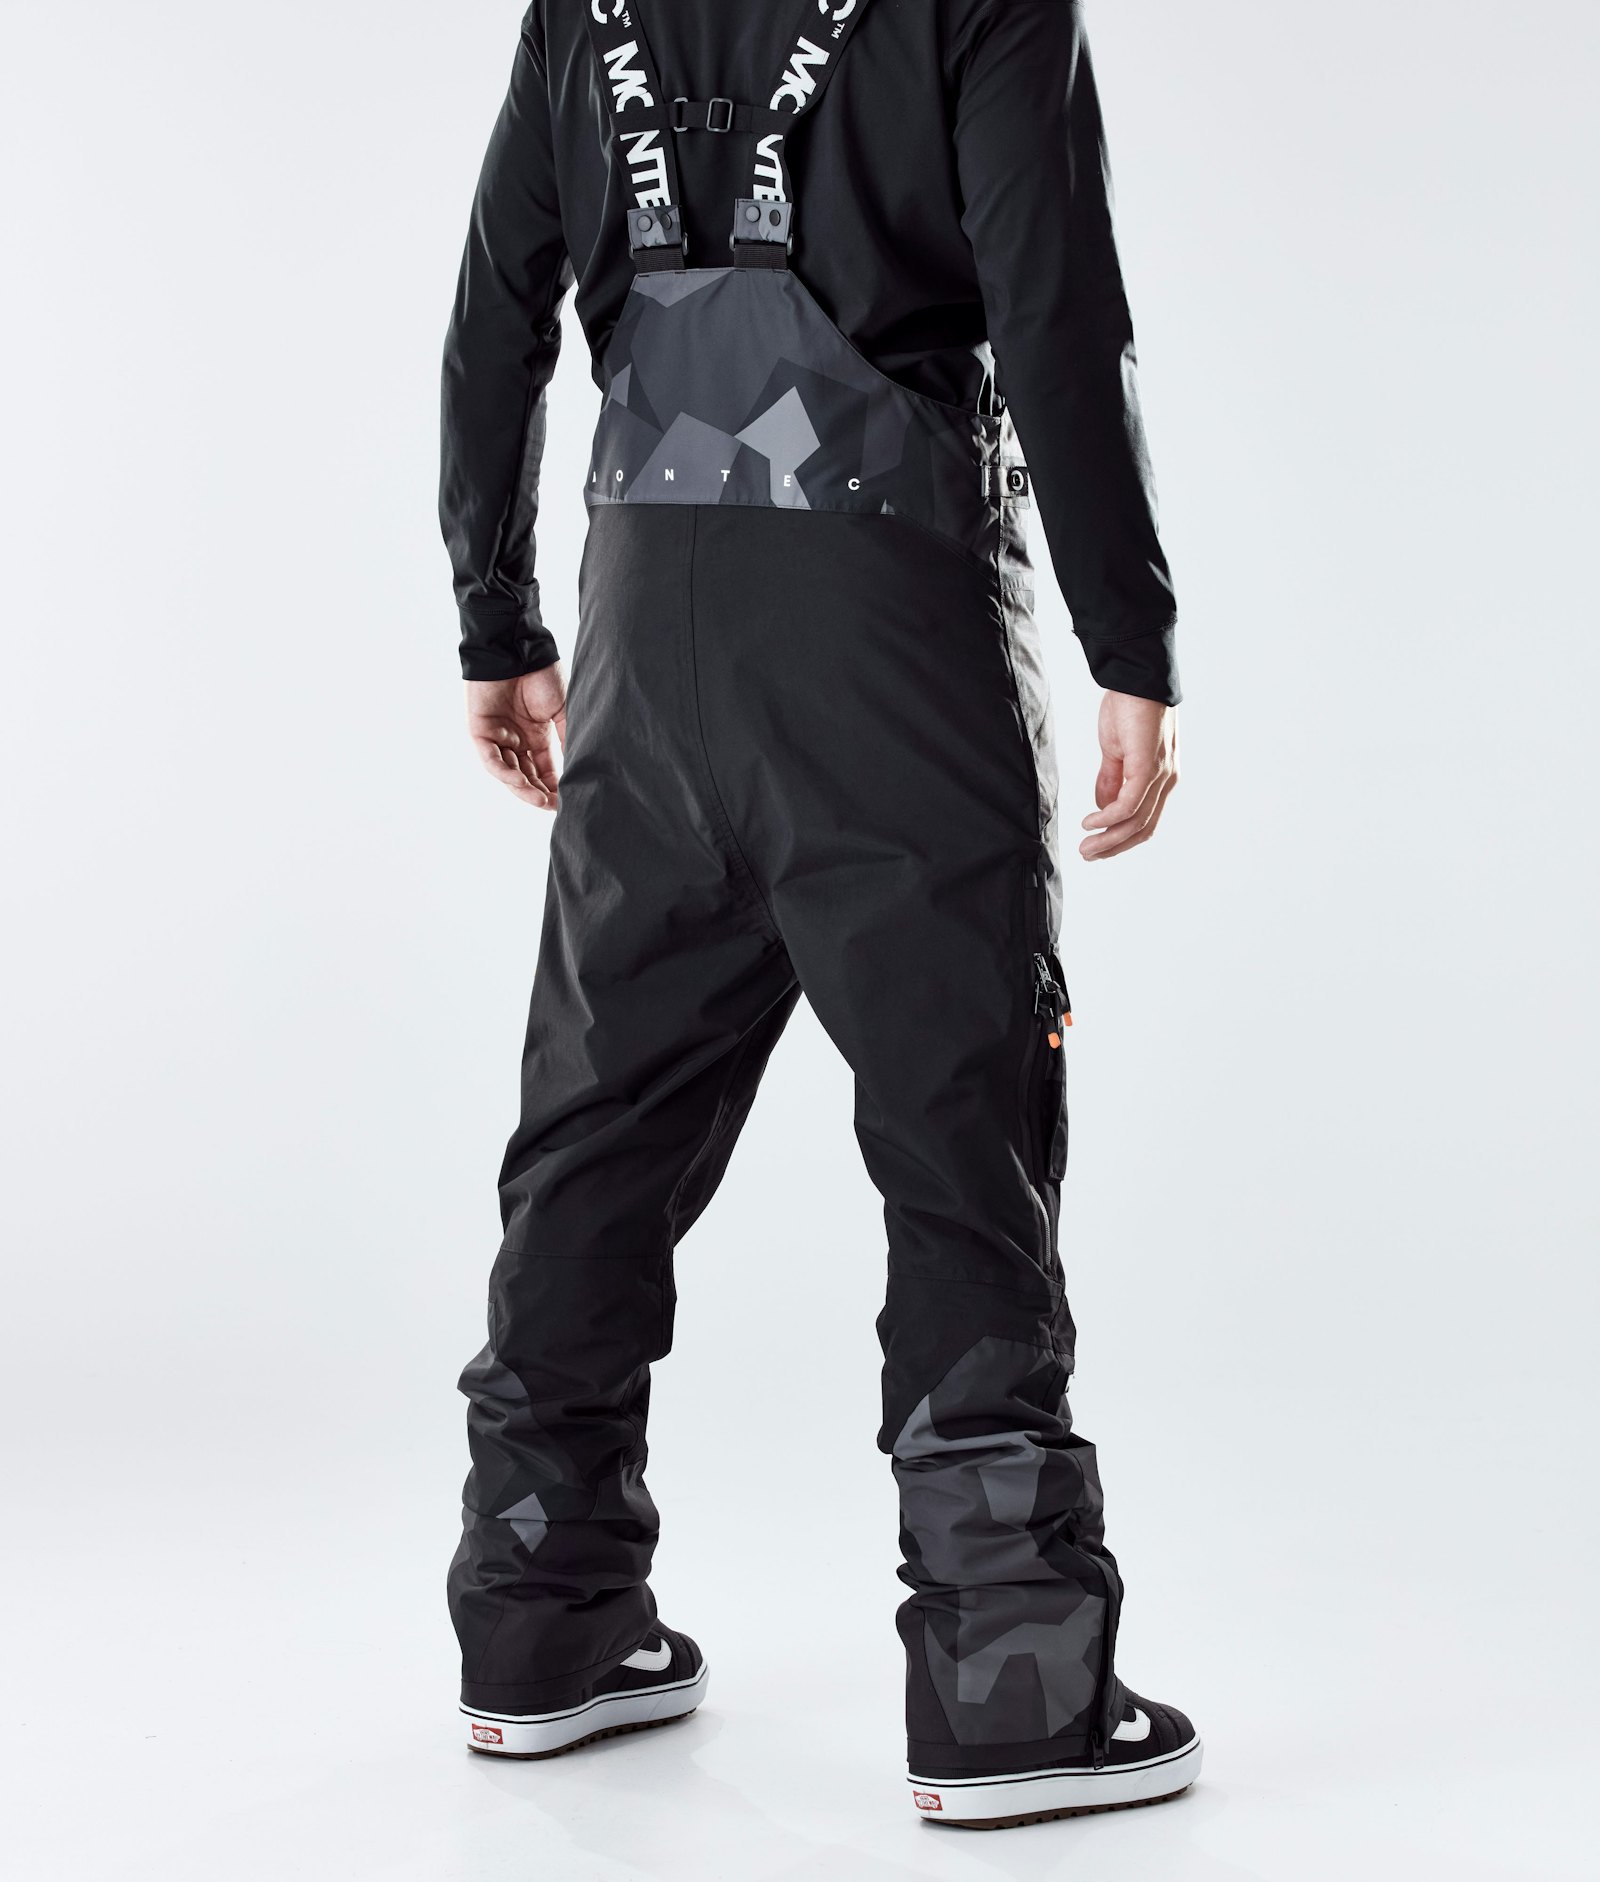 Fawk 2020 Snowboardhose Herren Night Camo/Black